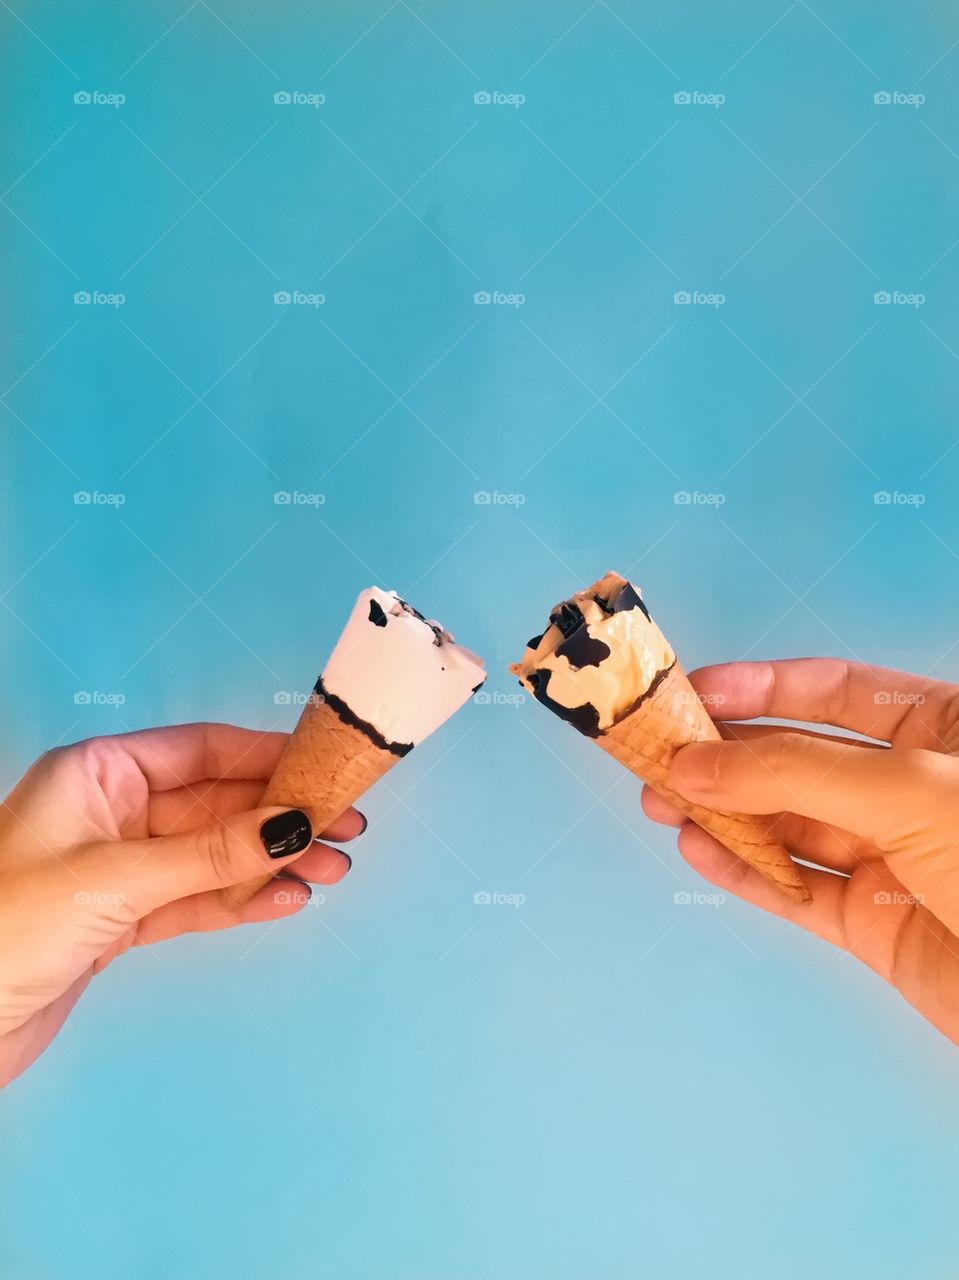 Hands holding ice cream cone